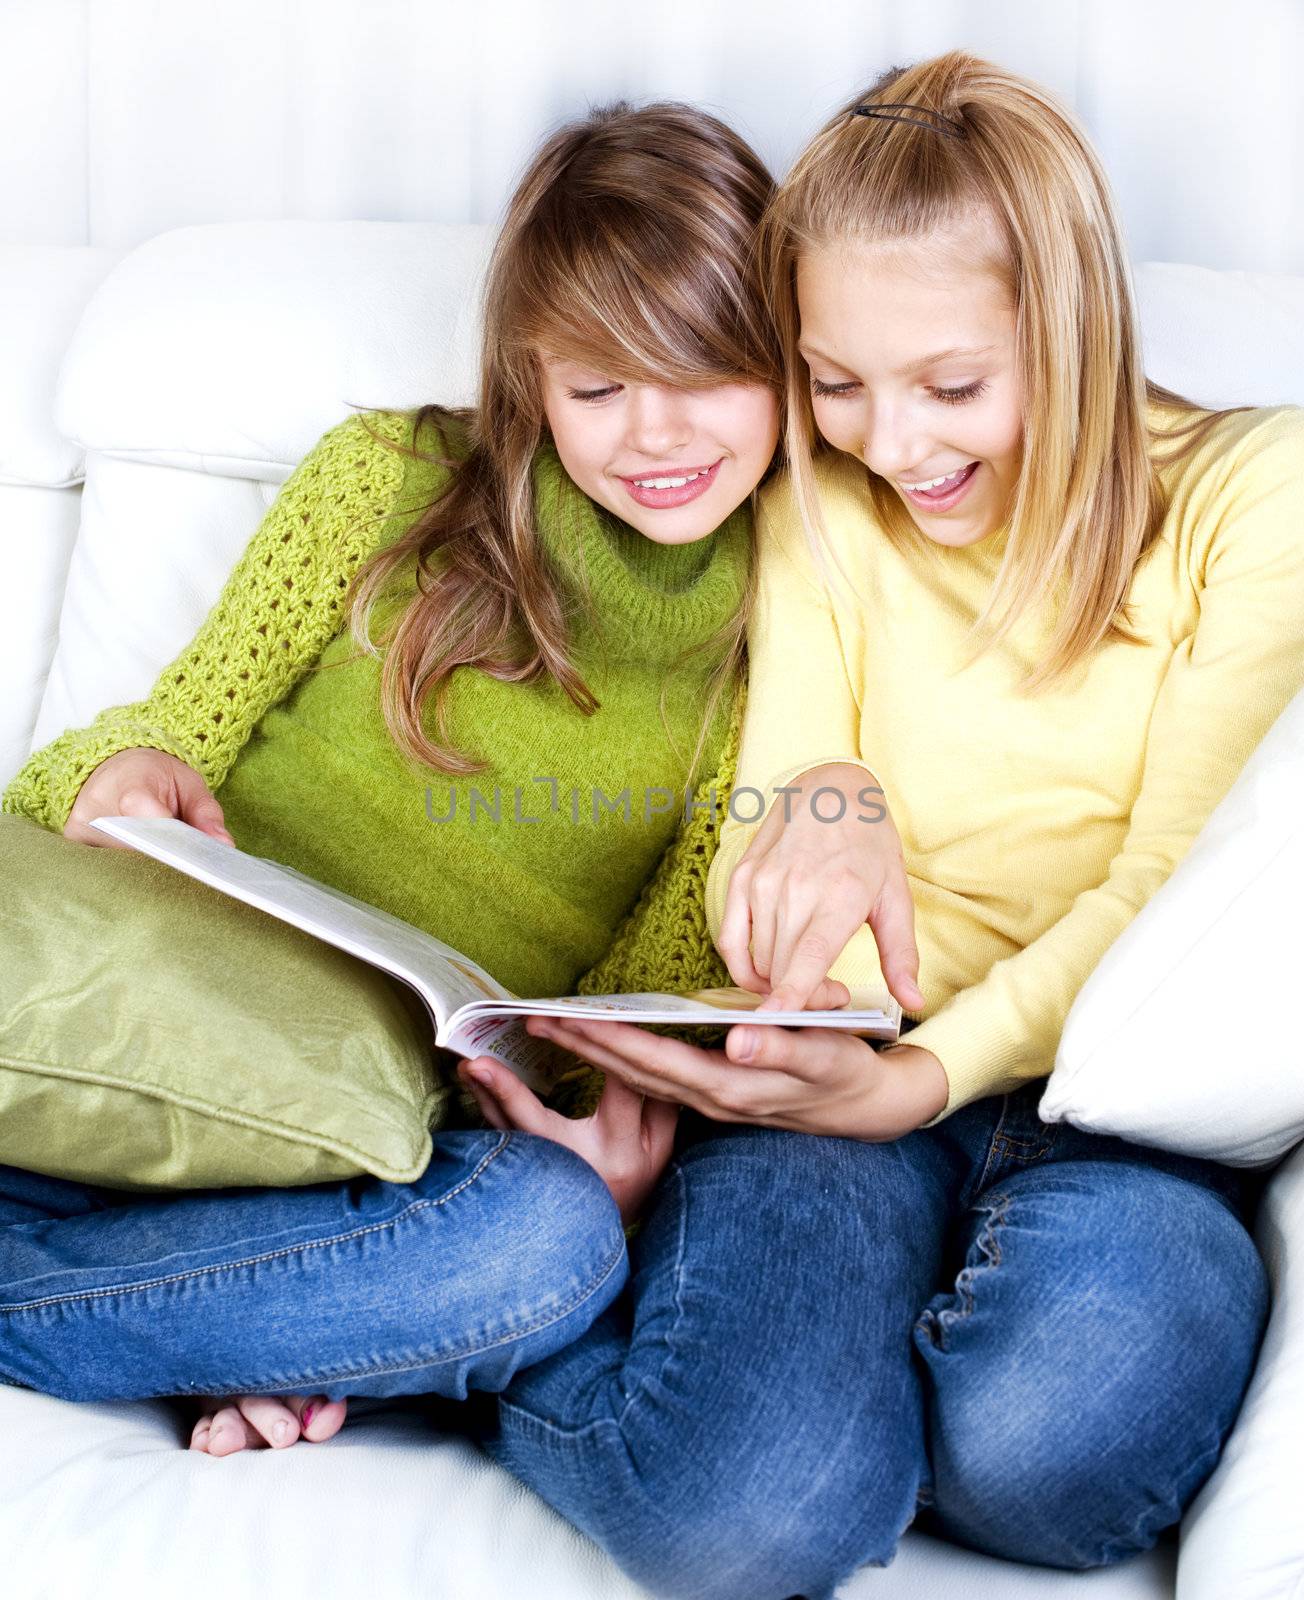 Teenage Girls reading fashion Magazine by SubbotinaA